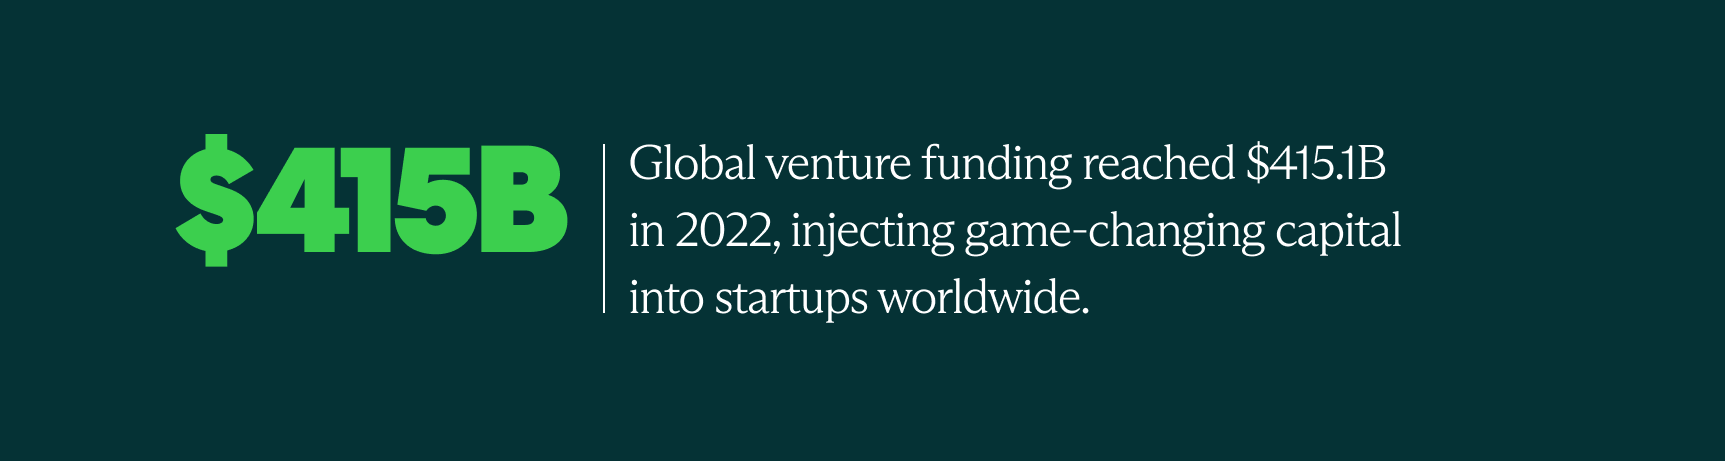 Global venture funding reached $415 billion in 2022, accelerating startups worldwide